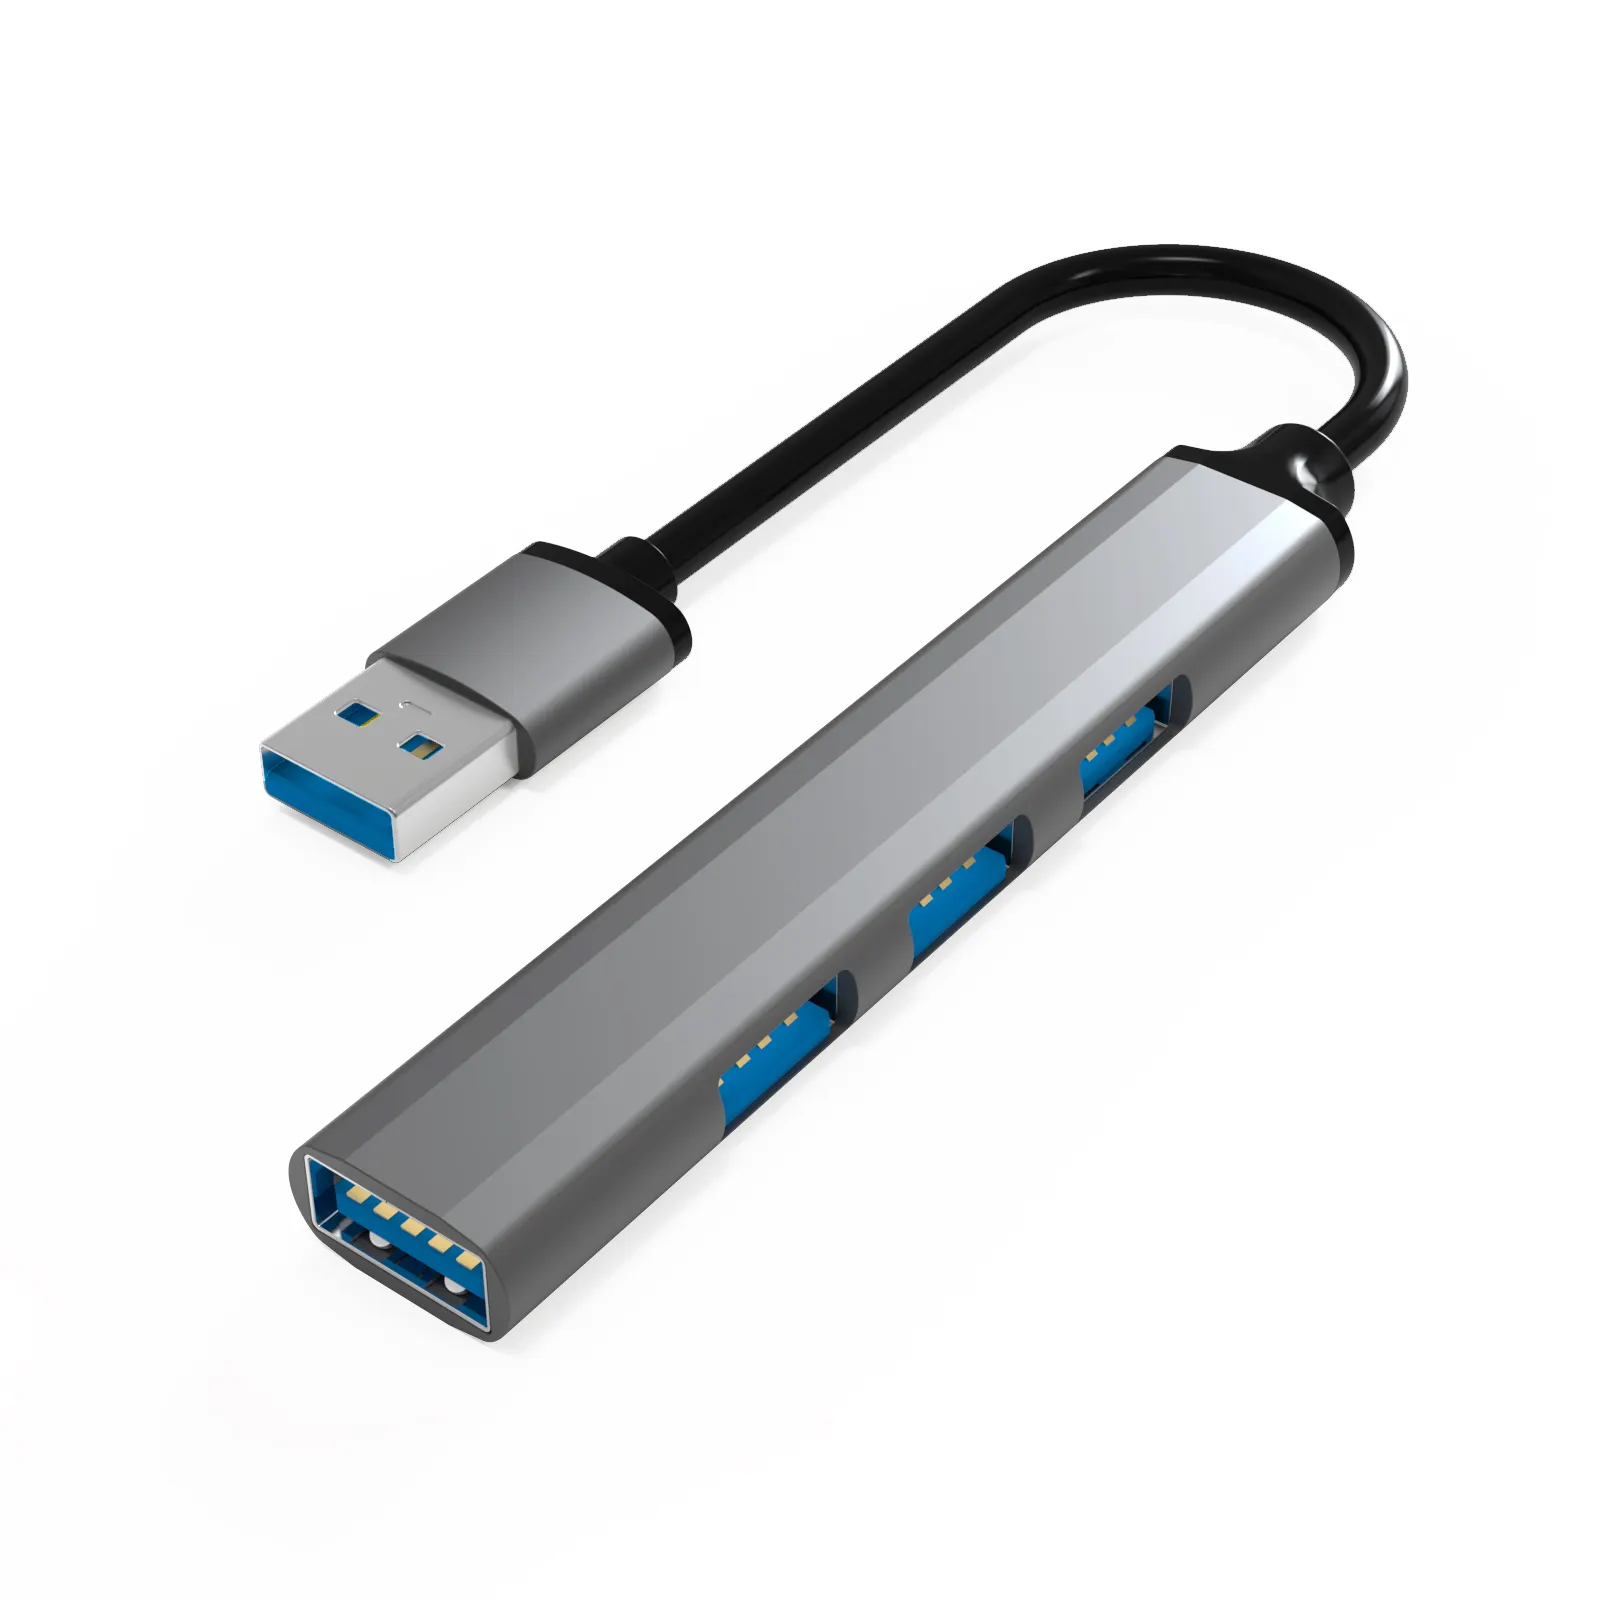 Docking station 4 port USB A to USB*3 USB3.0 ABS Aluminum alloy BASIX Hot sale hub